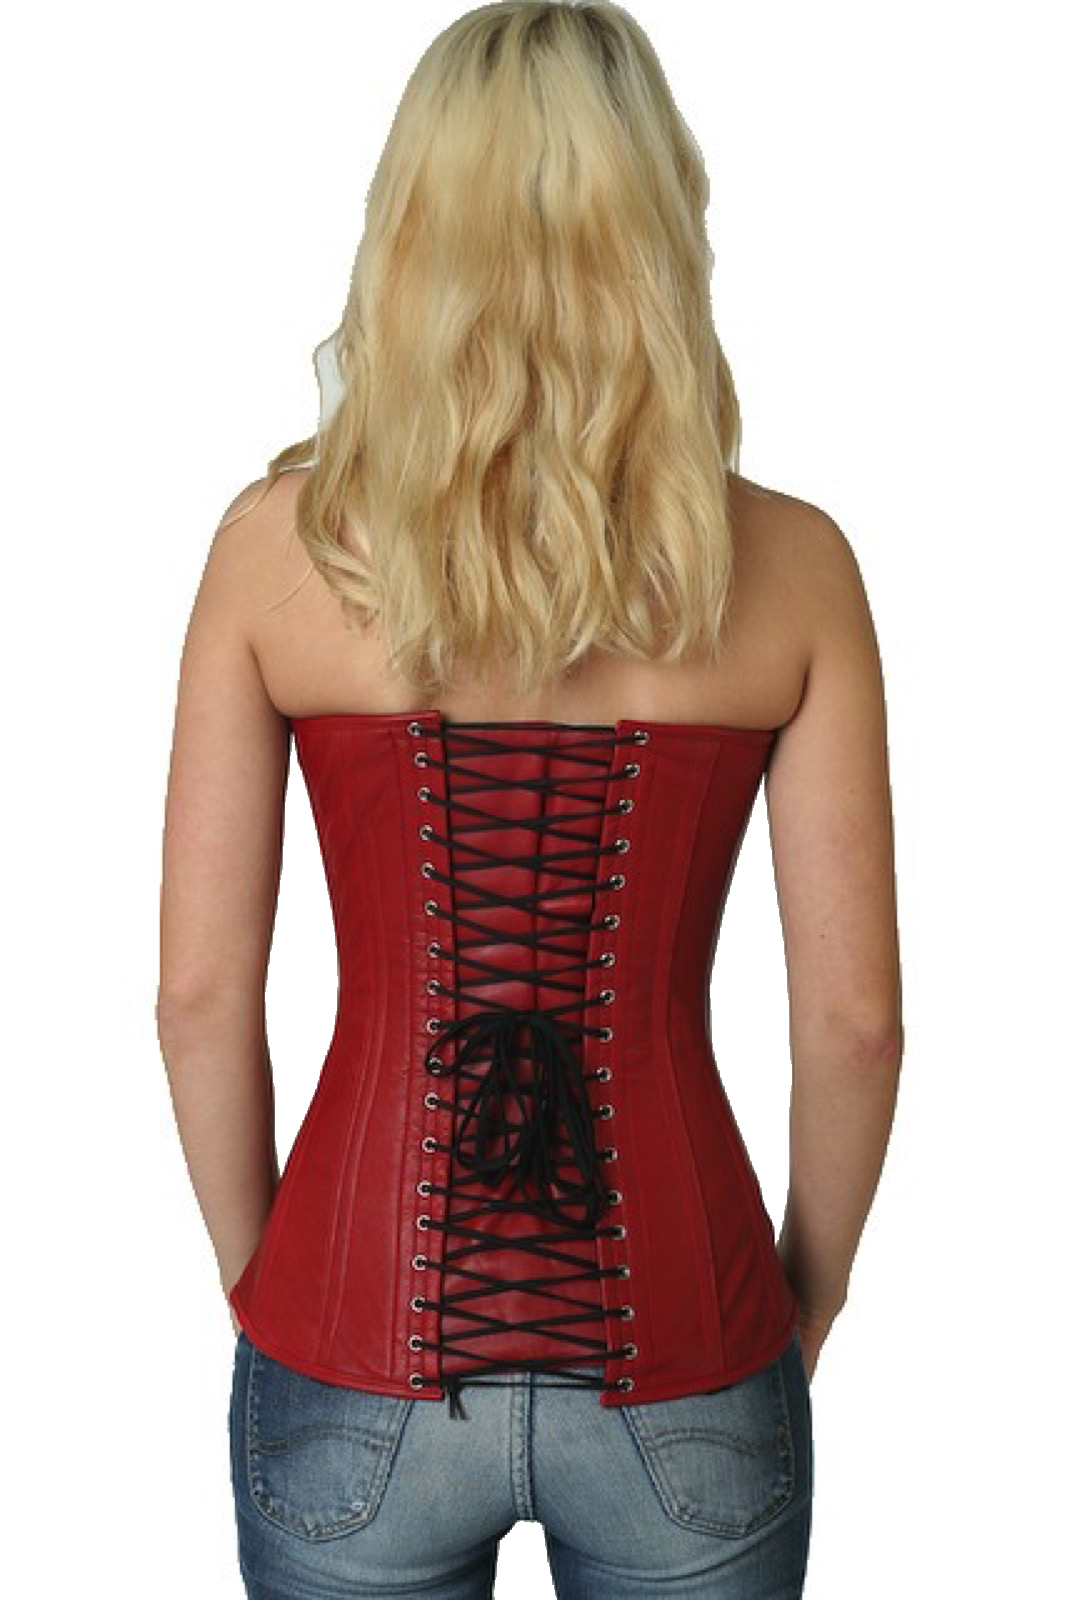 Leren corset rood volborst Korset ly23